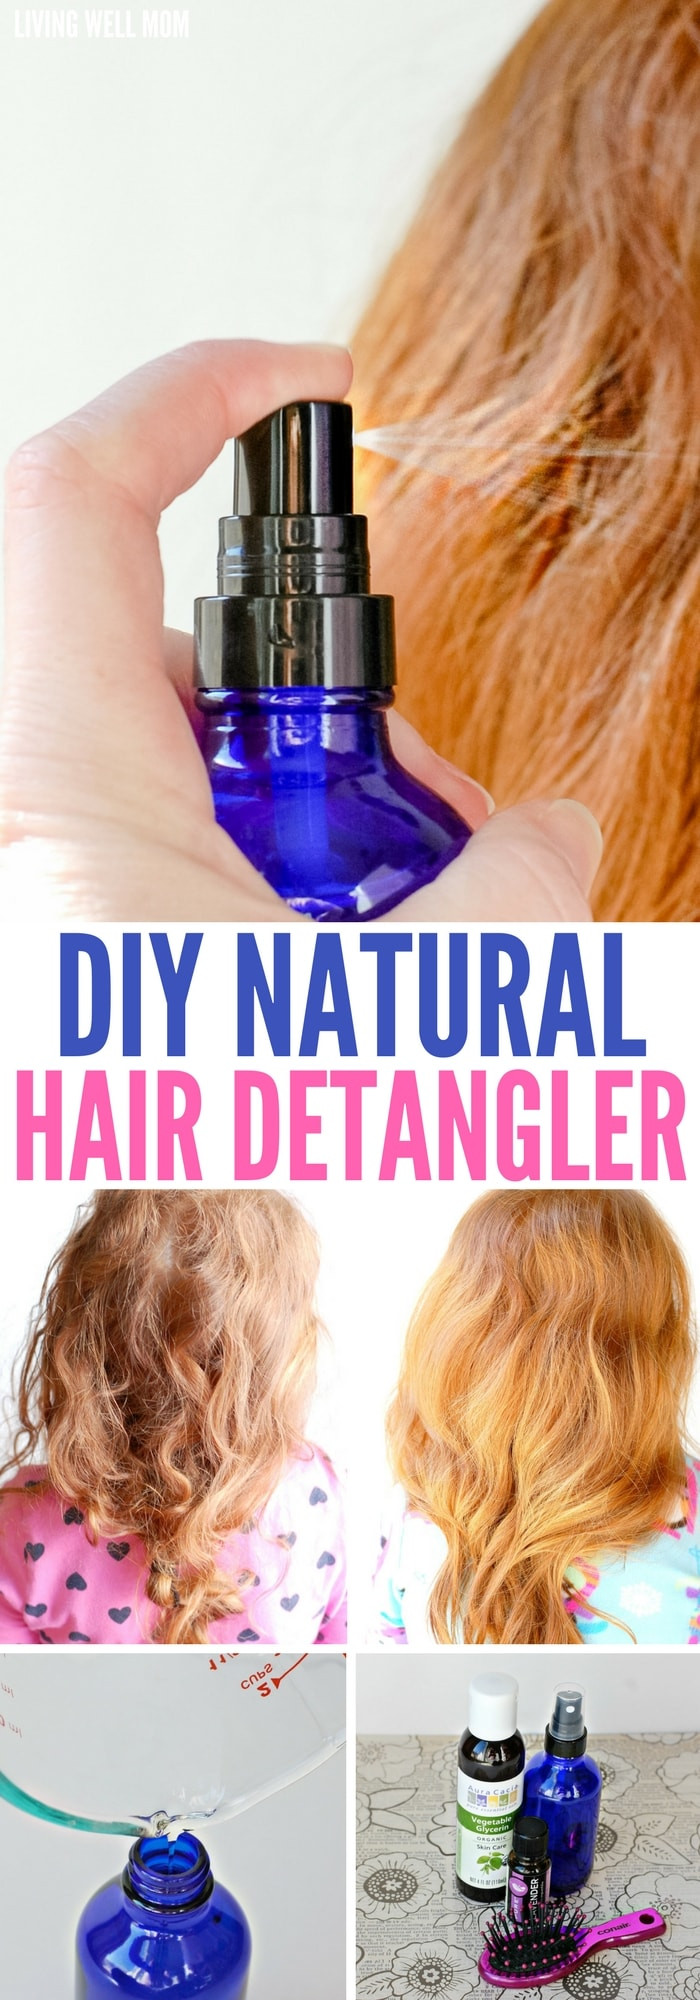 Diy Natural Hairstyles
 DIY Natural Hair Detangler with Essential Oils